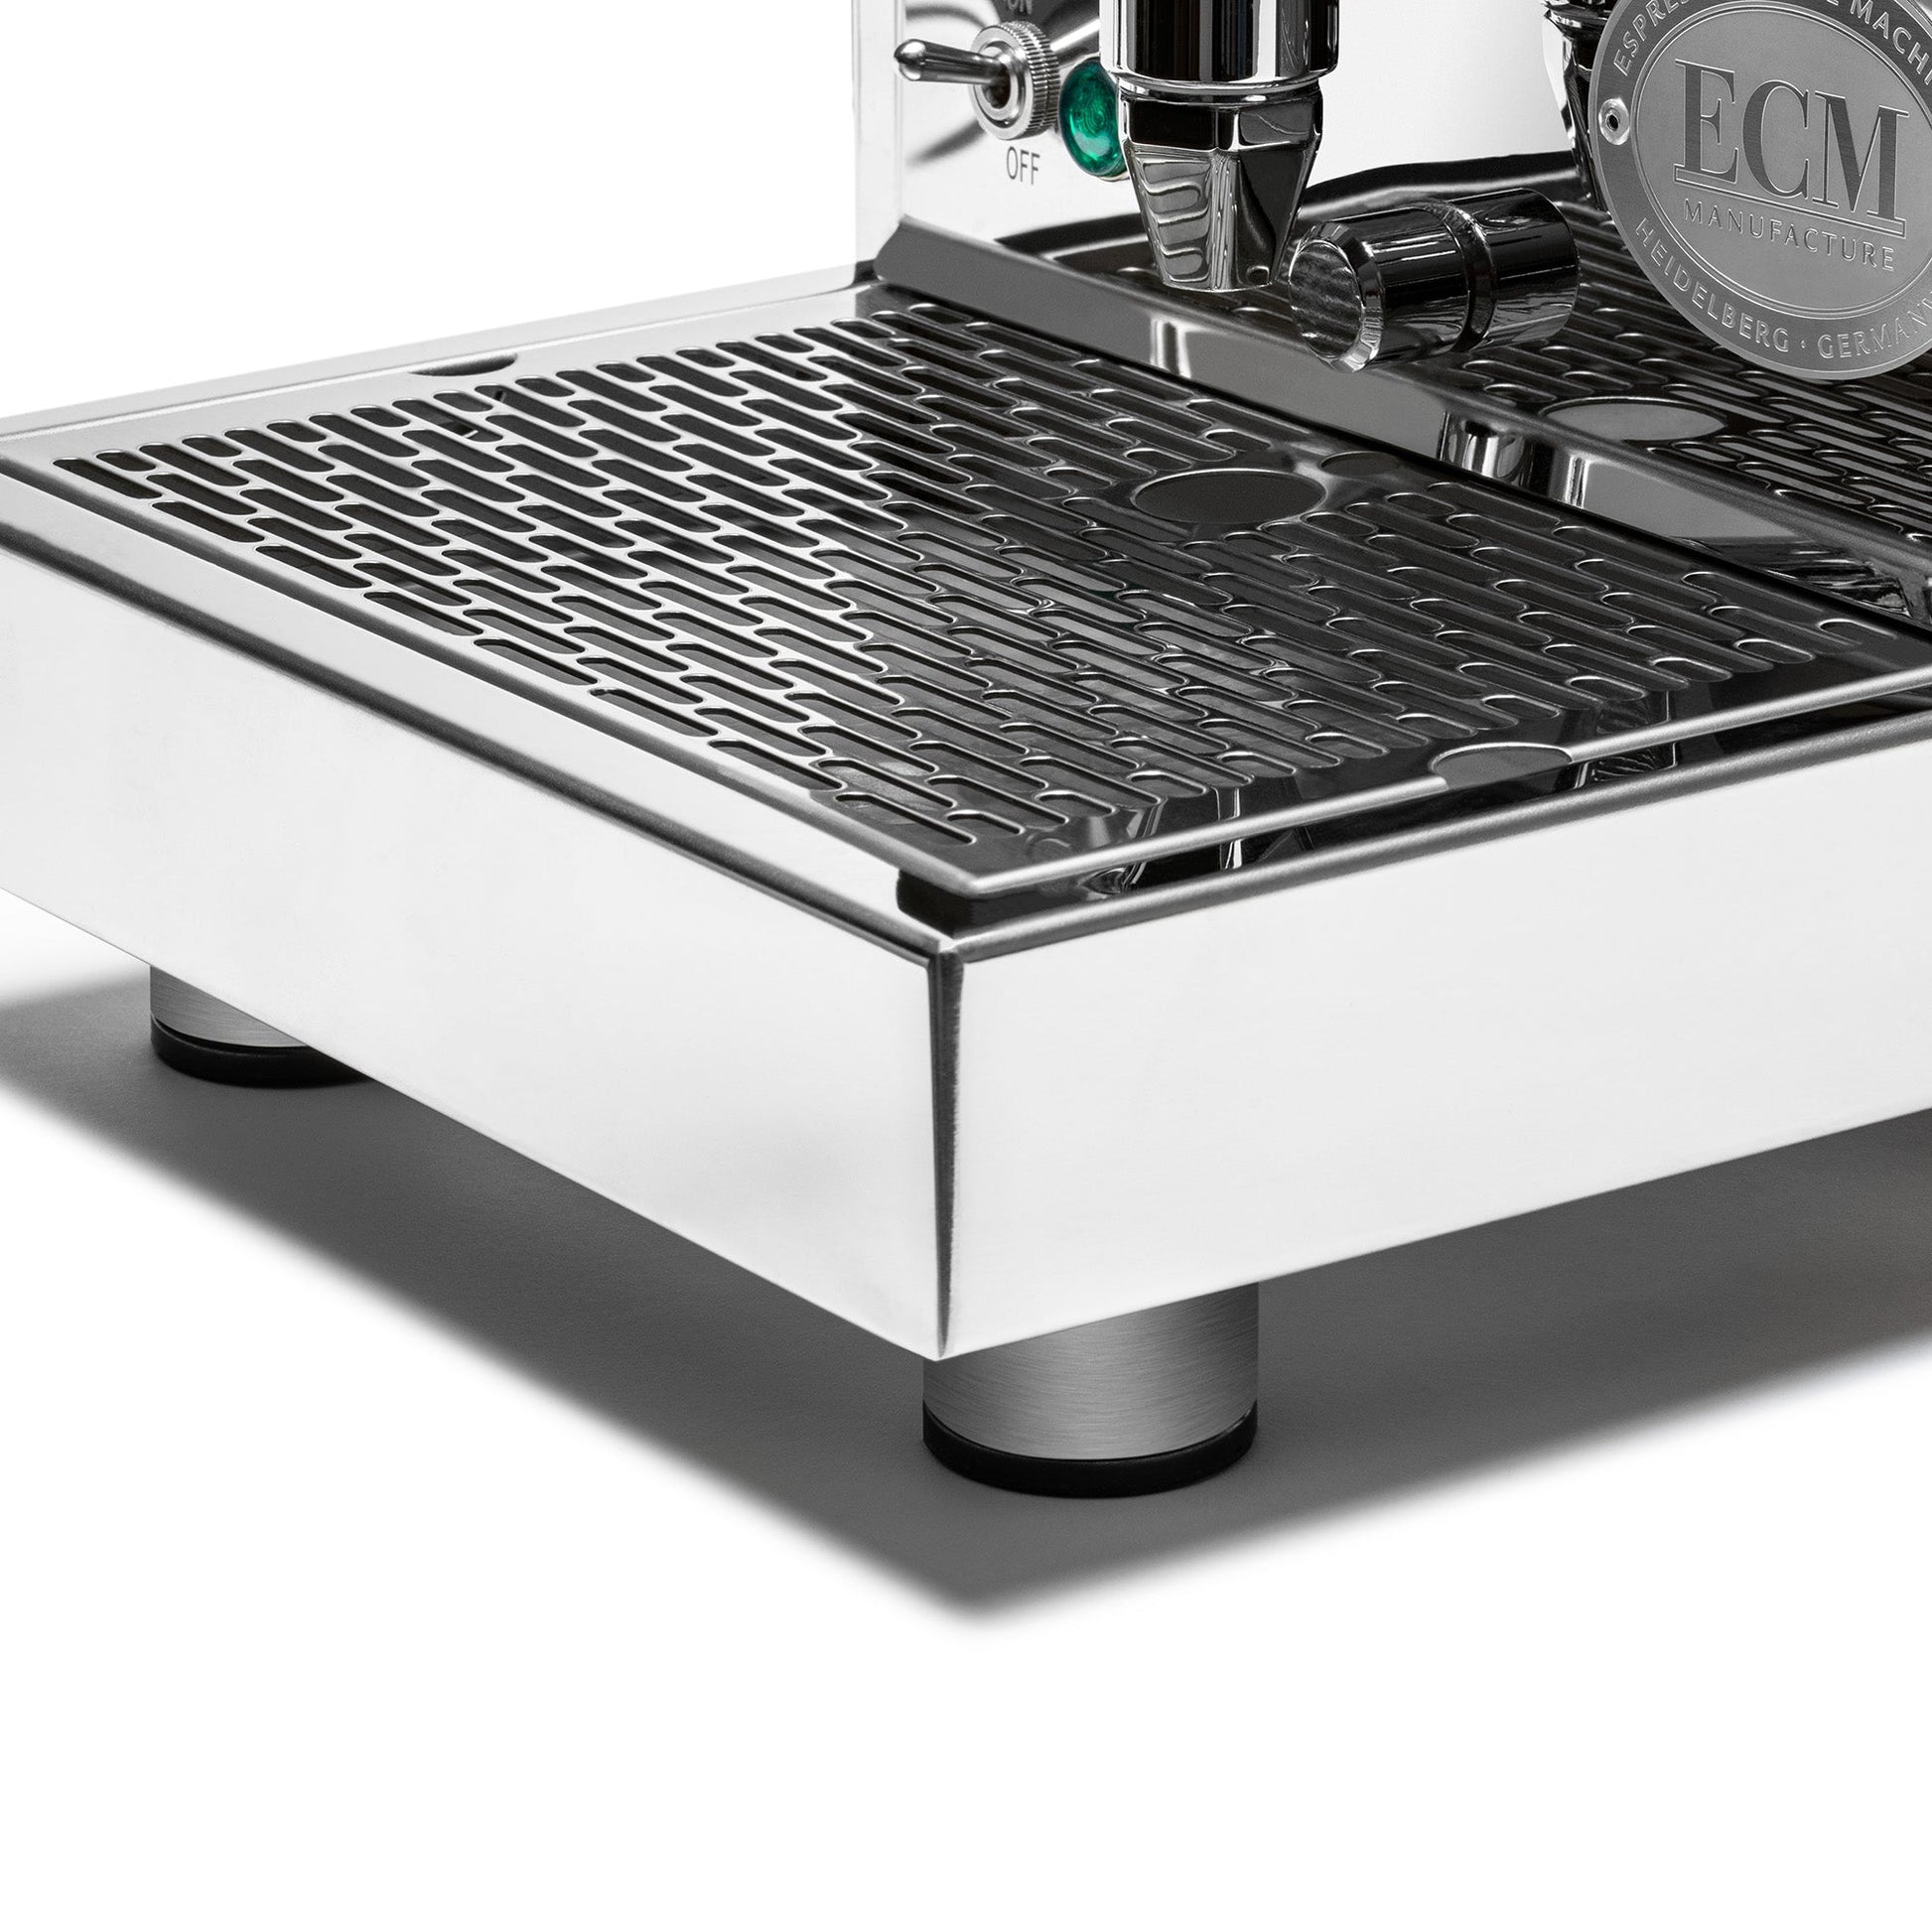 ECM Mechanika Max Espresso Machine with Flow Control – Whole Latte Love